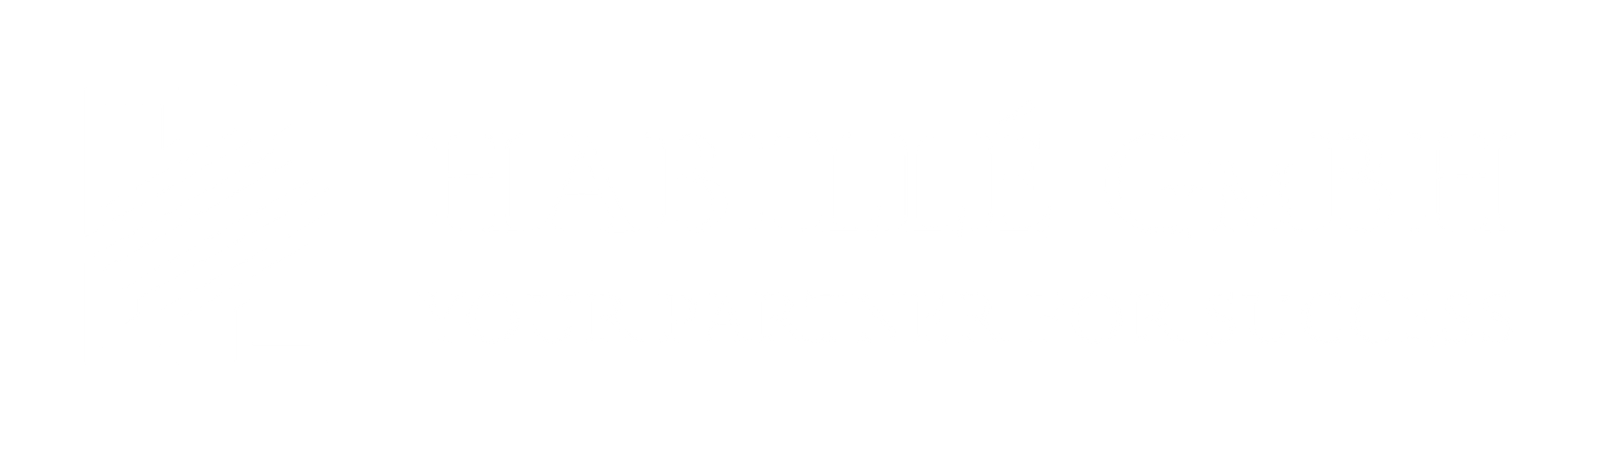 HABILLÉ GmbH -